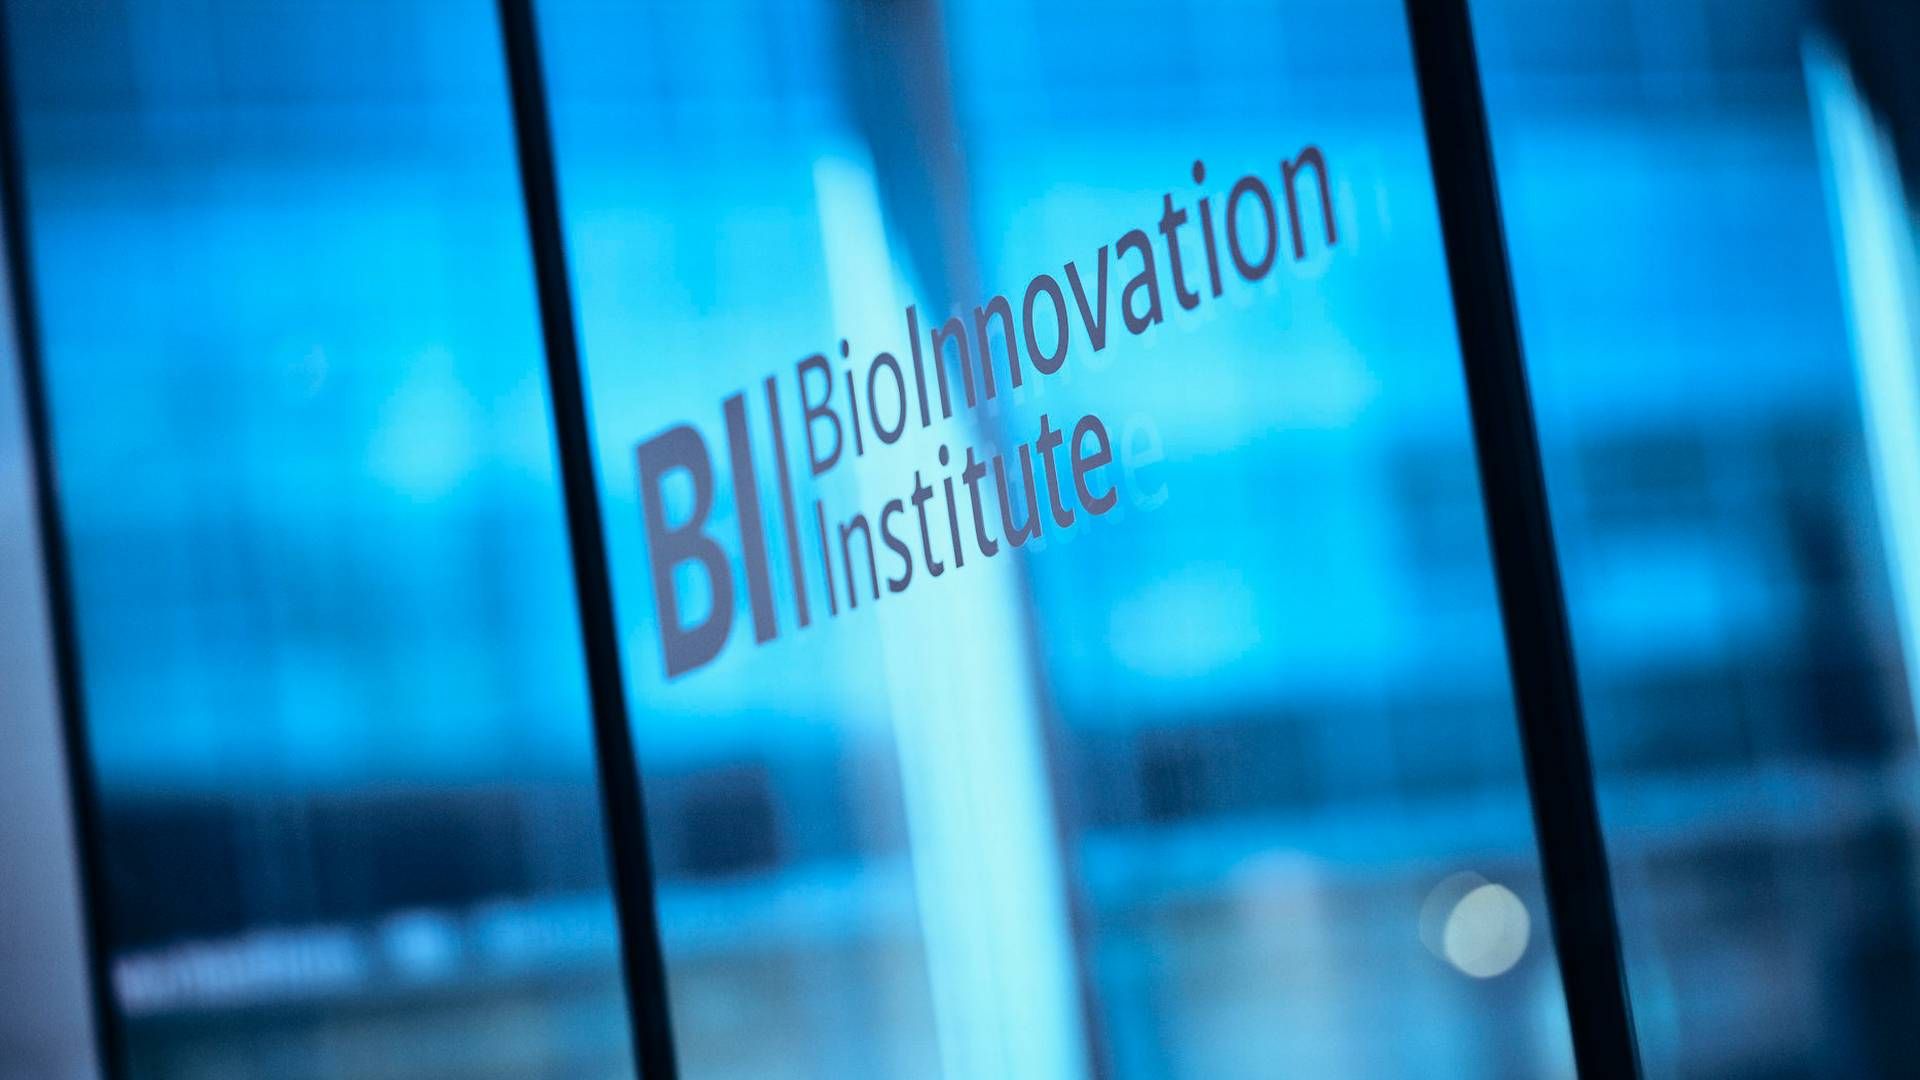 Foto: Bioinnovation Institute / Pr